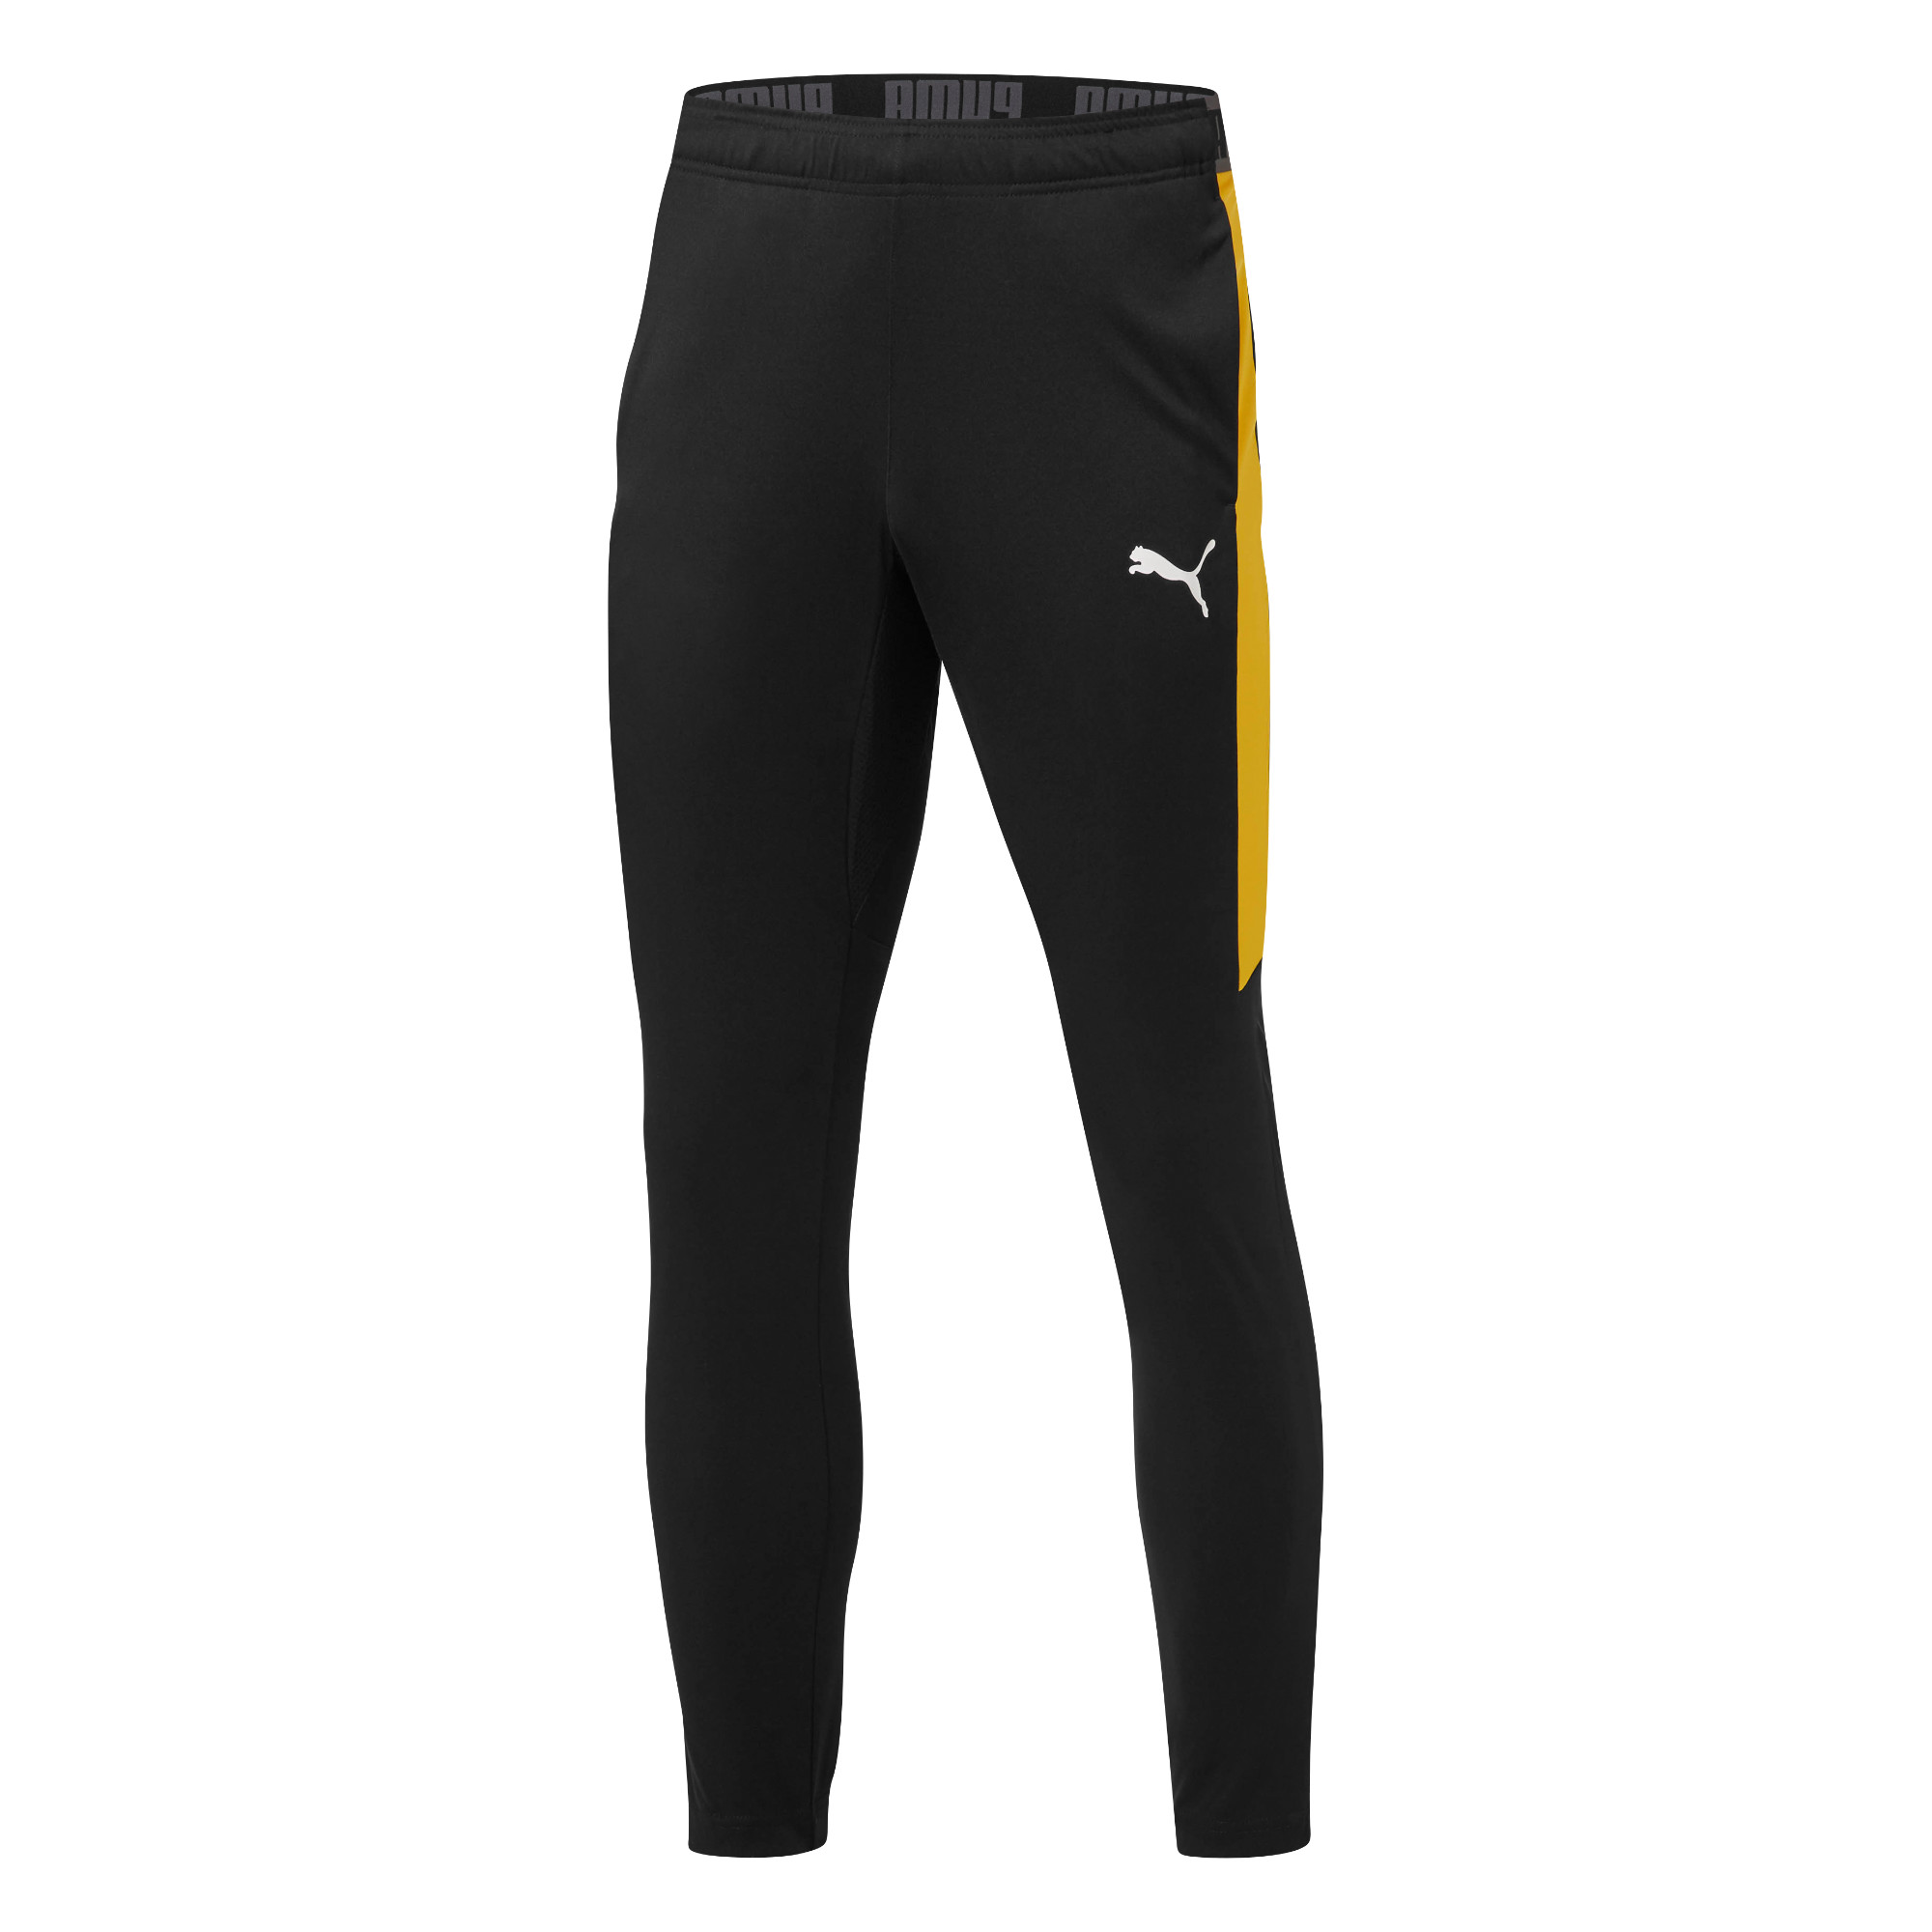 Puma Men's Speed Training Pants Black 